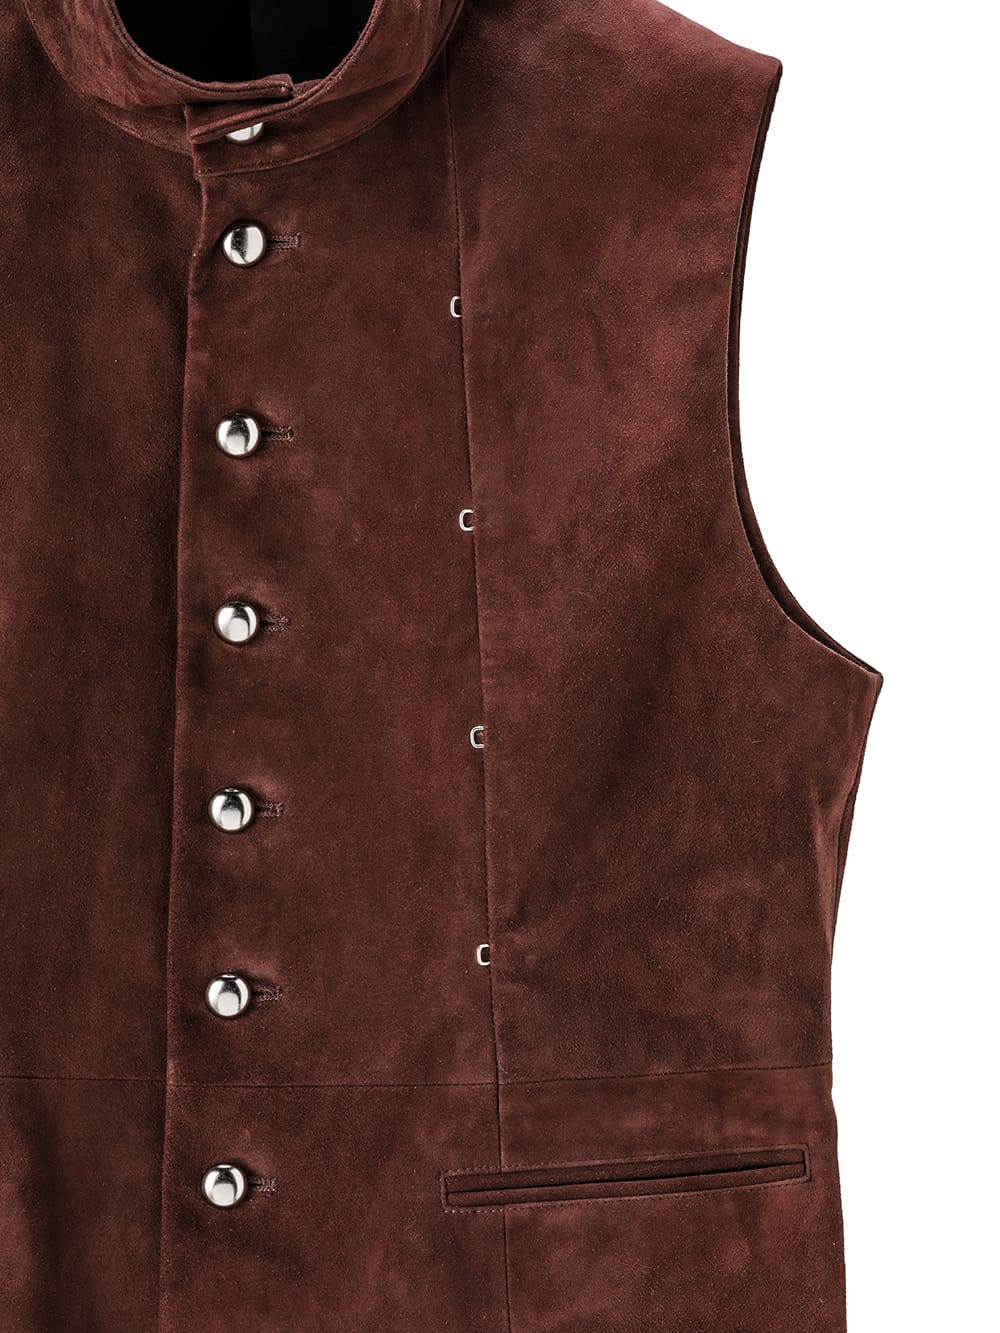 right - left sleeveless victorian jacket.